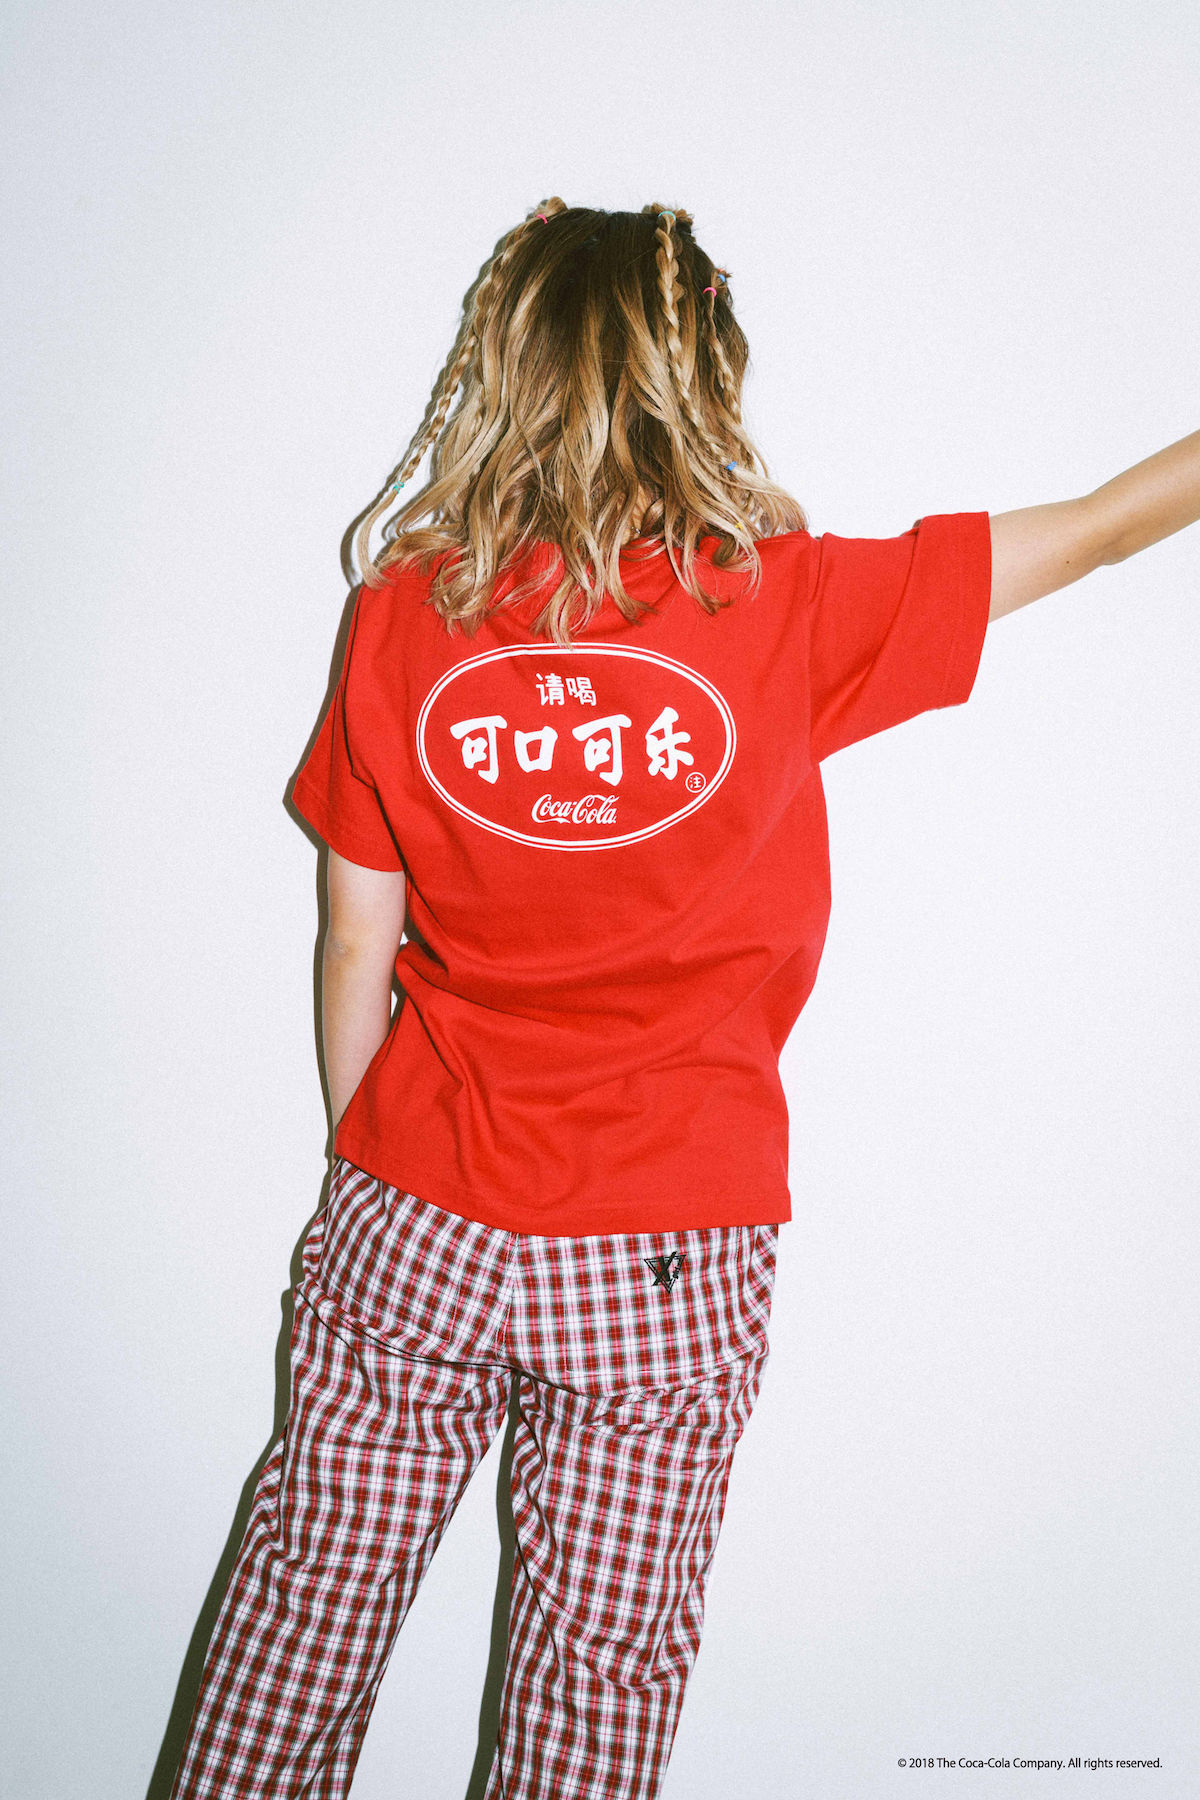 X-girl×コカ・コーラ！「コカ·コーラ」中国語ロゴを採用したオリエンタルなTシャツなどが登場！ fashion180226_xgirl-coke_6-1200x1800